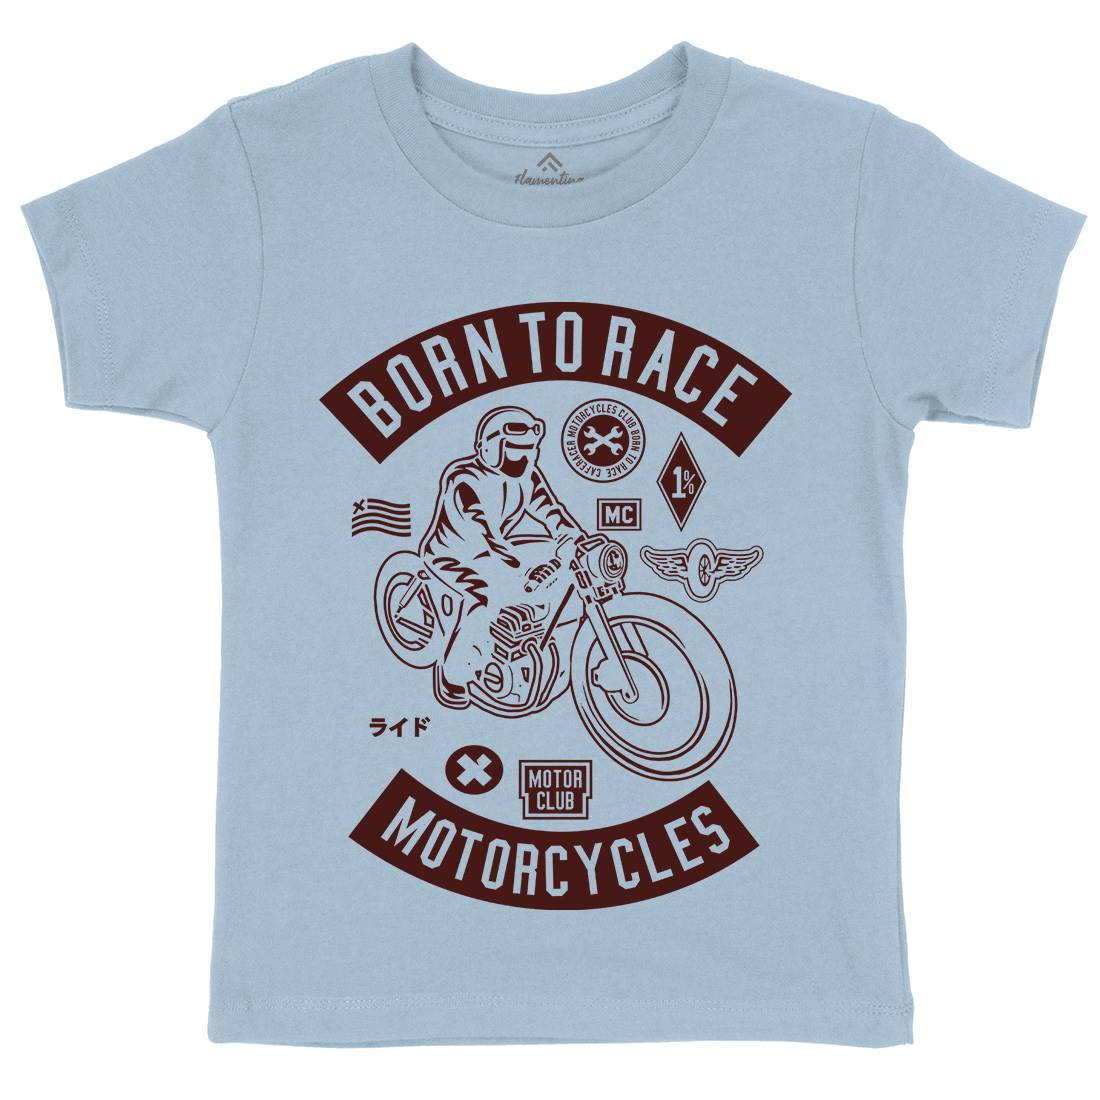 Born To Race Kids Organic Crew Neck T-Shirt Motorcycles A210